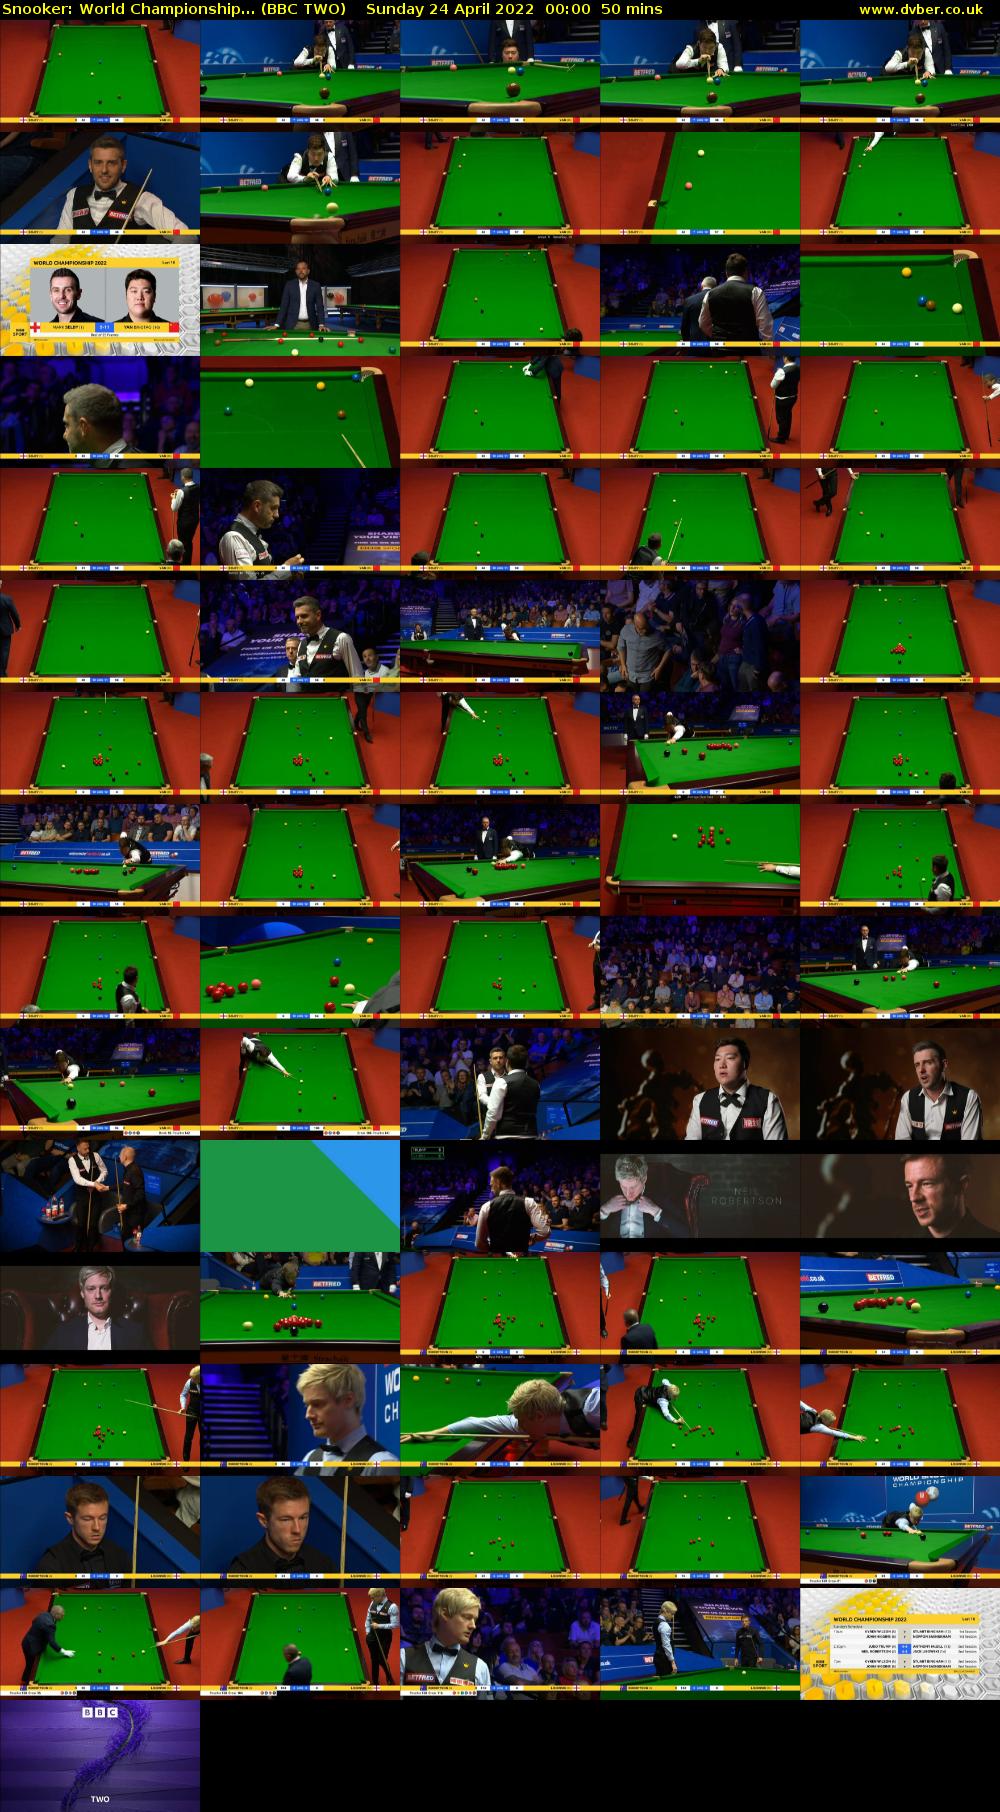 Snooker: World Championship... (BBC TWO) Sunday 24 April 2022 00:00 - 00:50